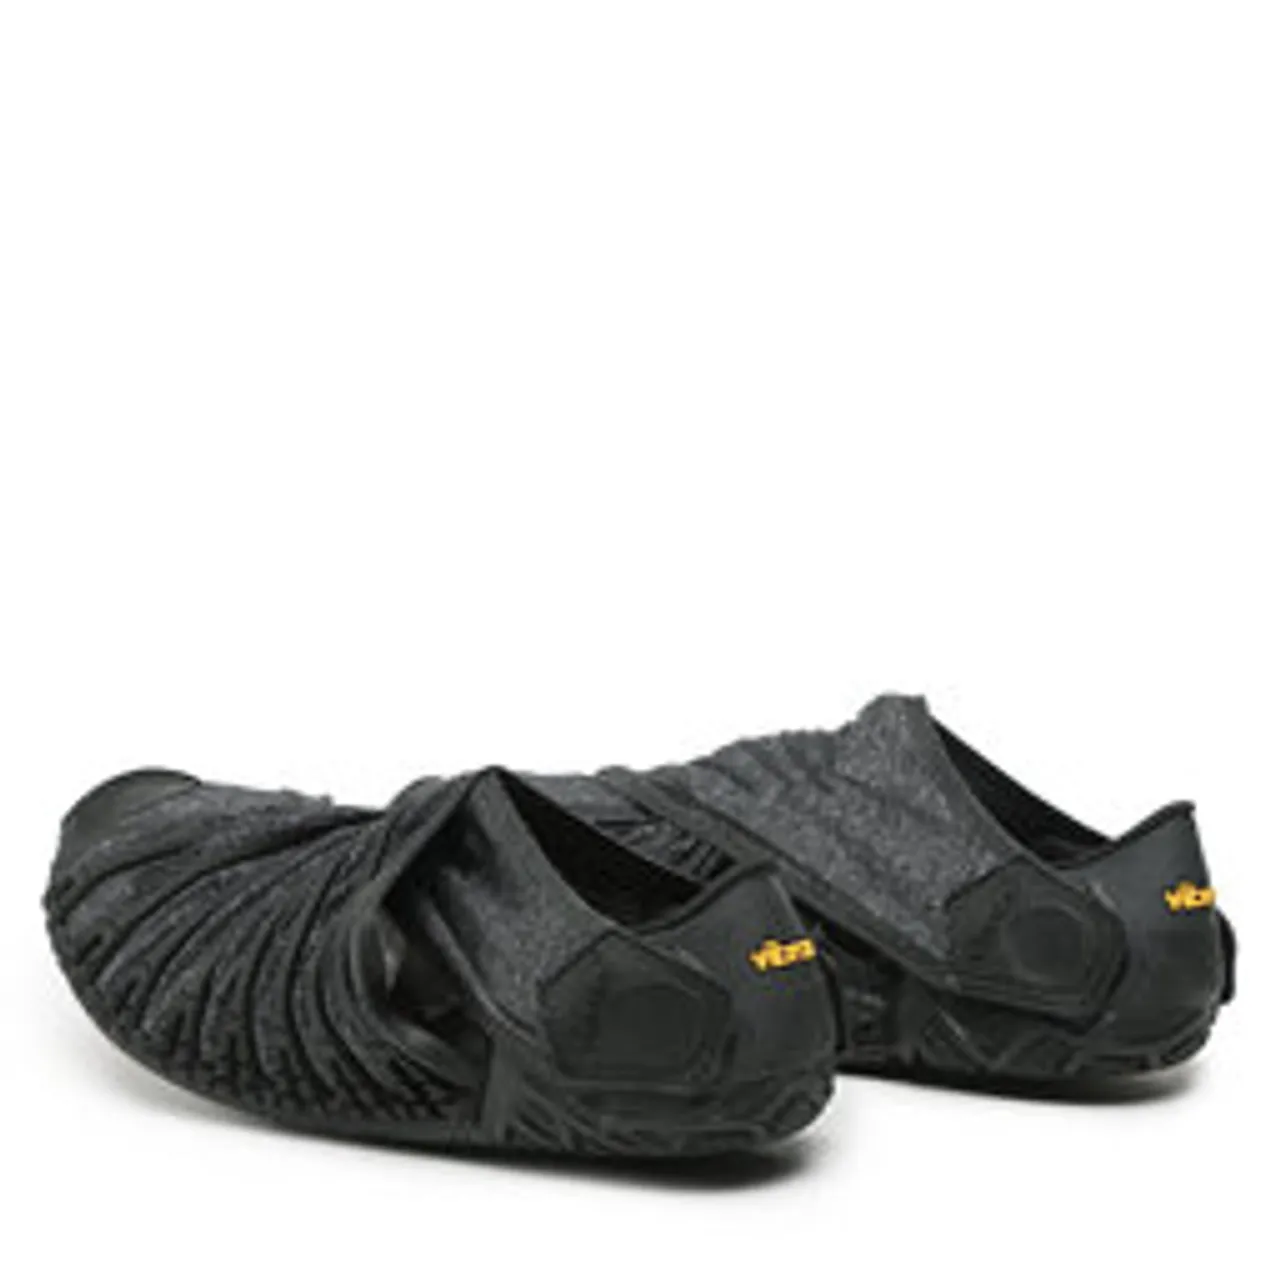 Schuhe Vibram Fivefingers Furoshiki 22MAF01 Black